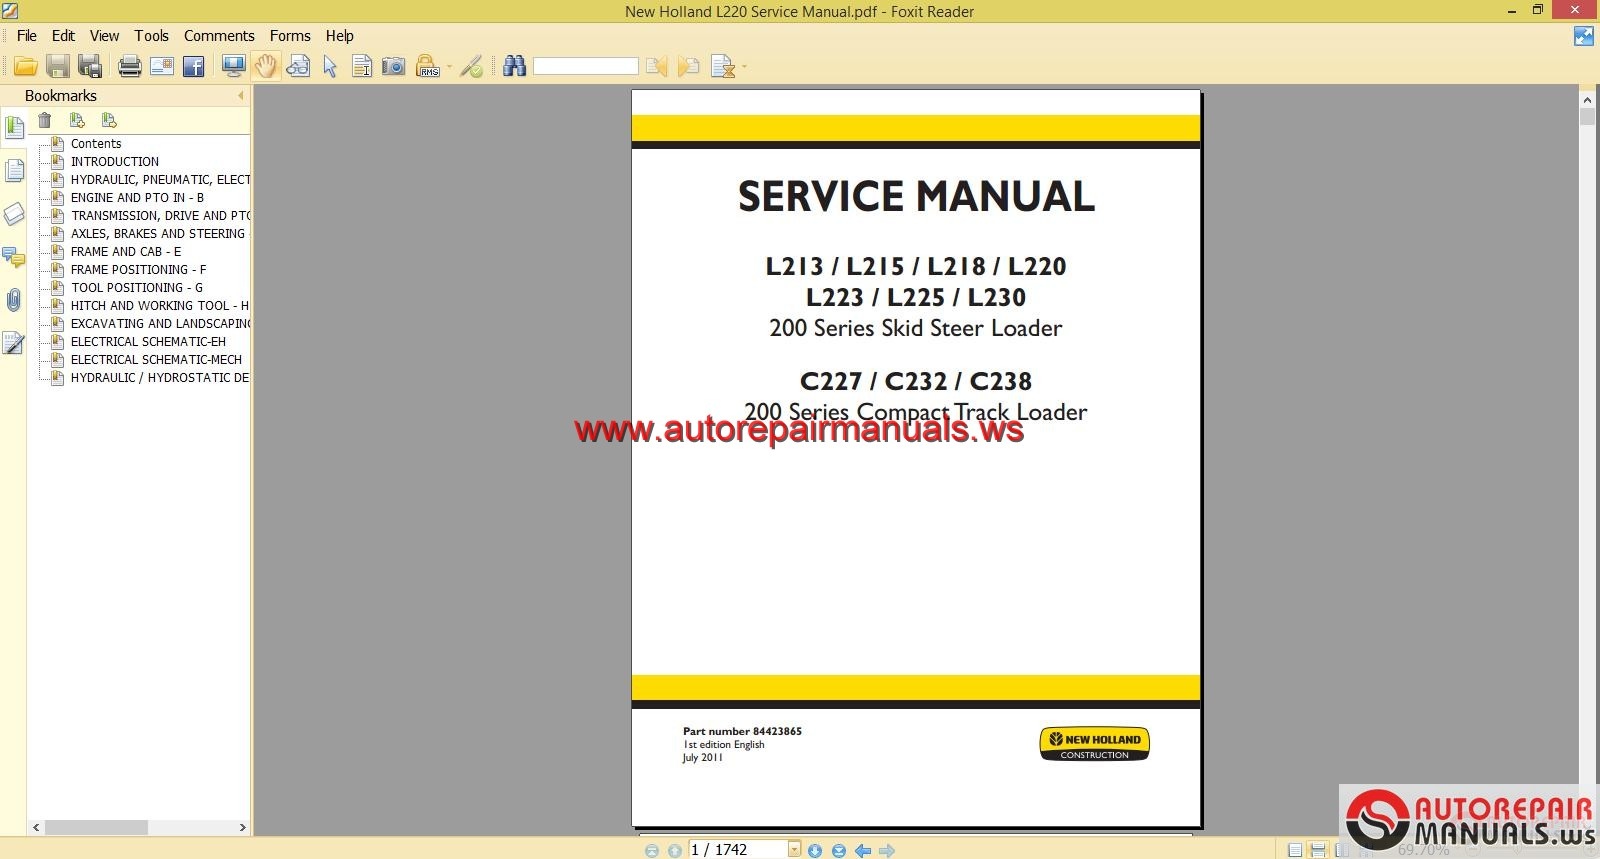 New Holland L220 Service Manual | Auto Repair Manual Forum - Heavy